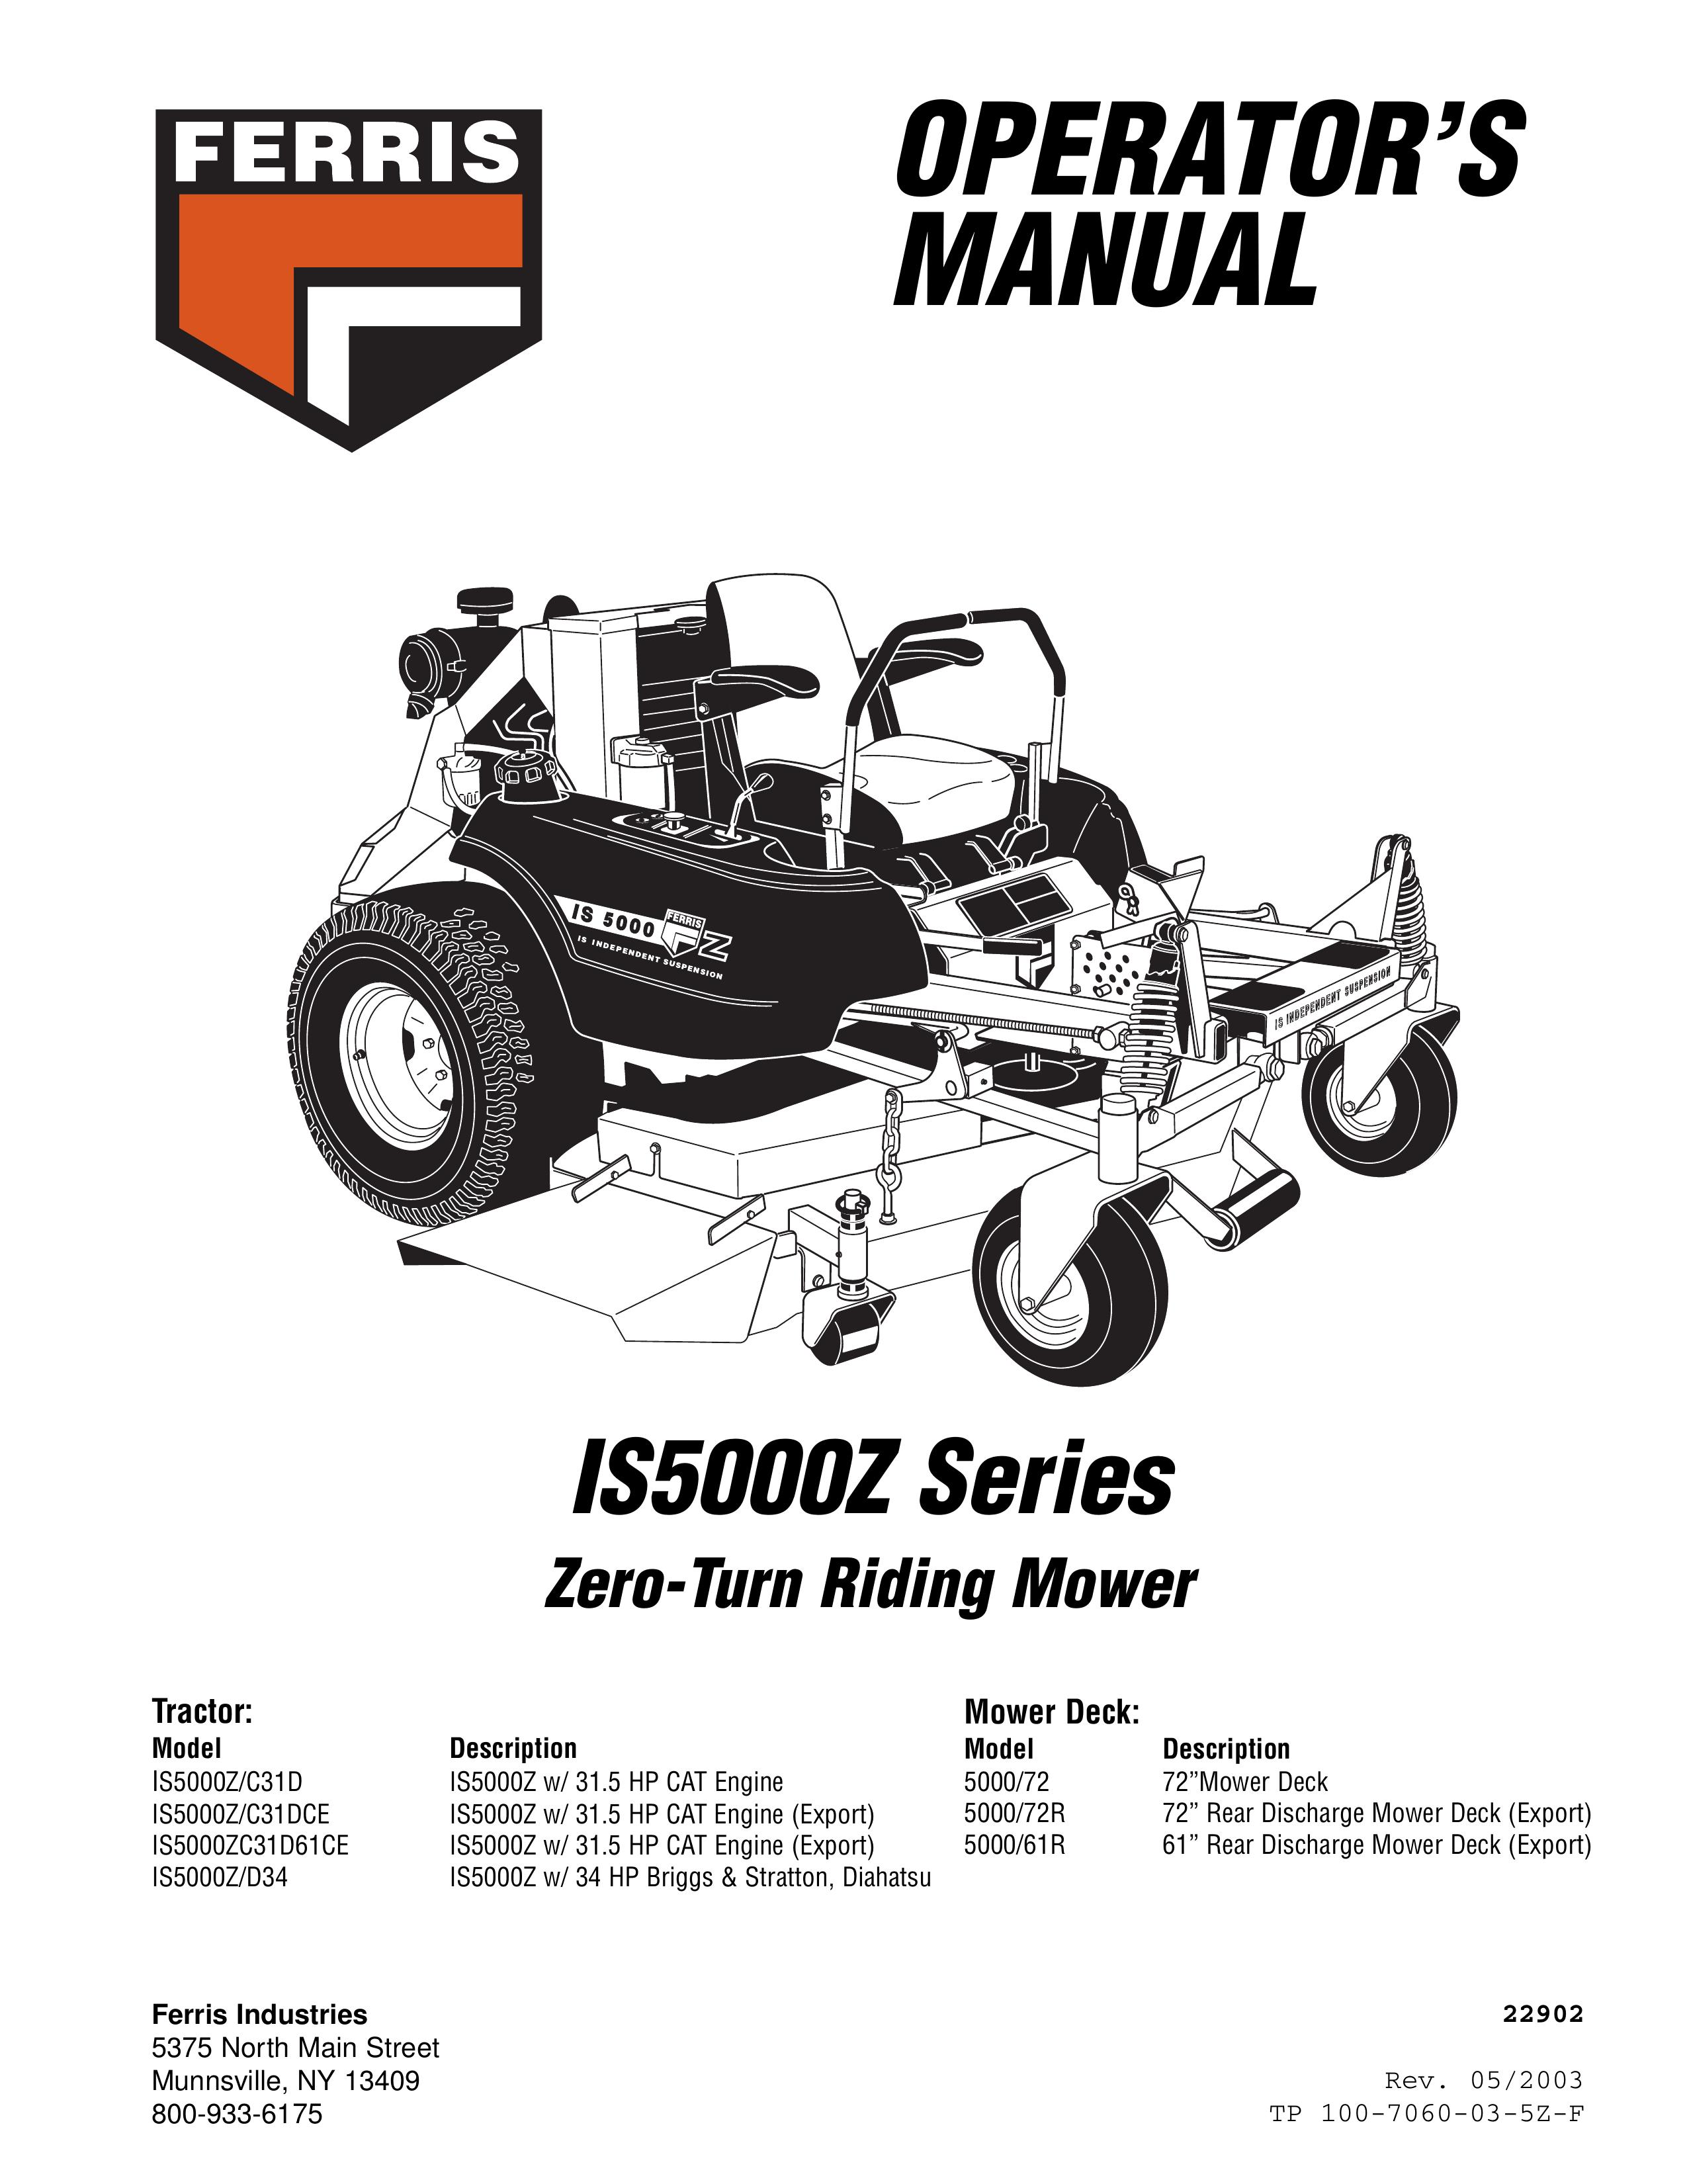 Ferris Industries 5000/61R Lawn Mower User Manual